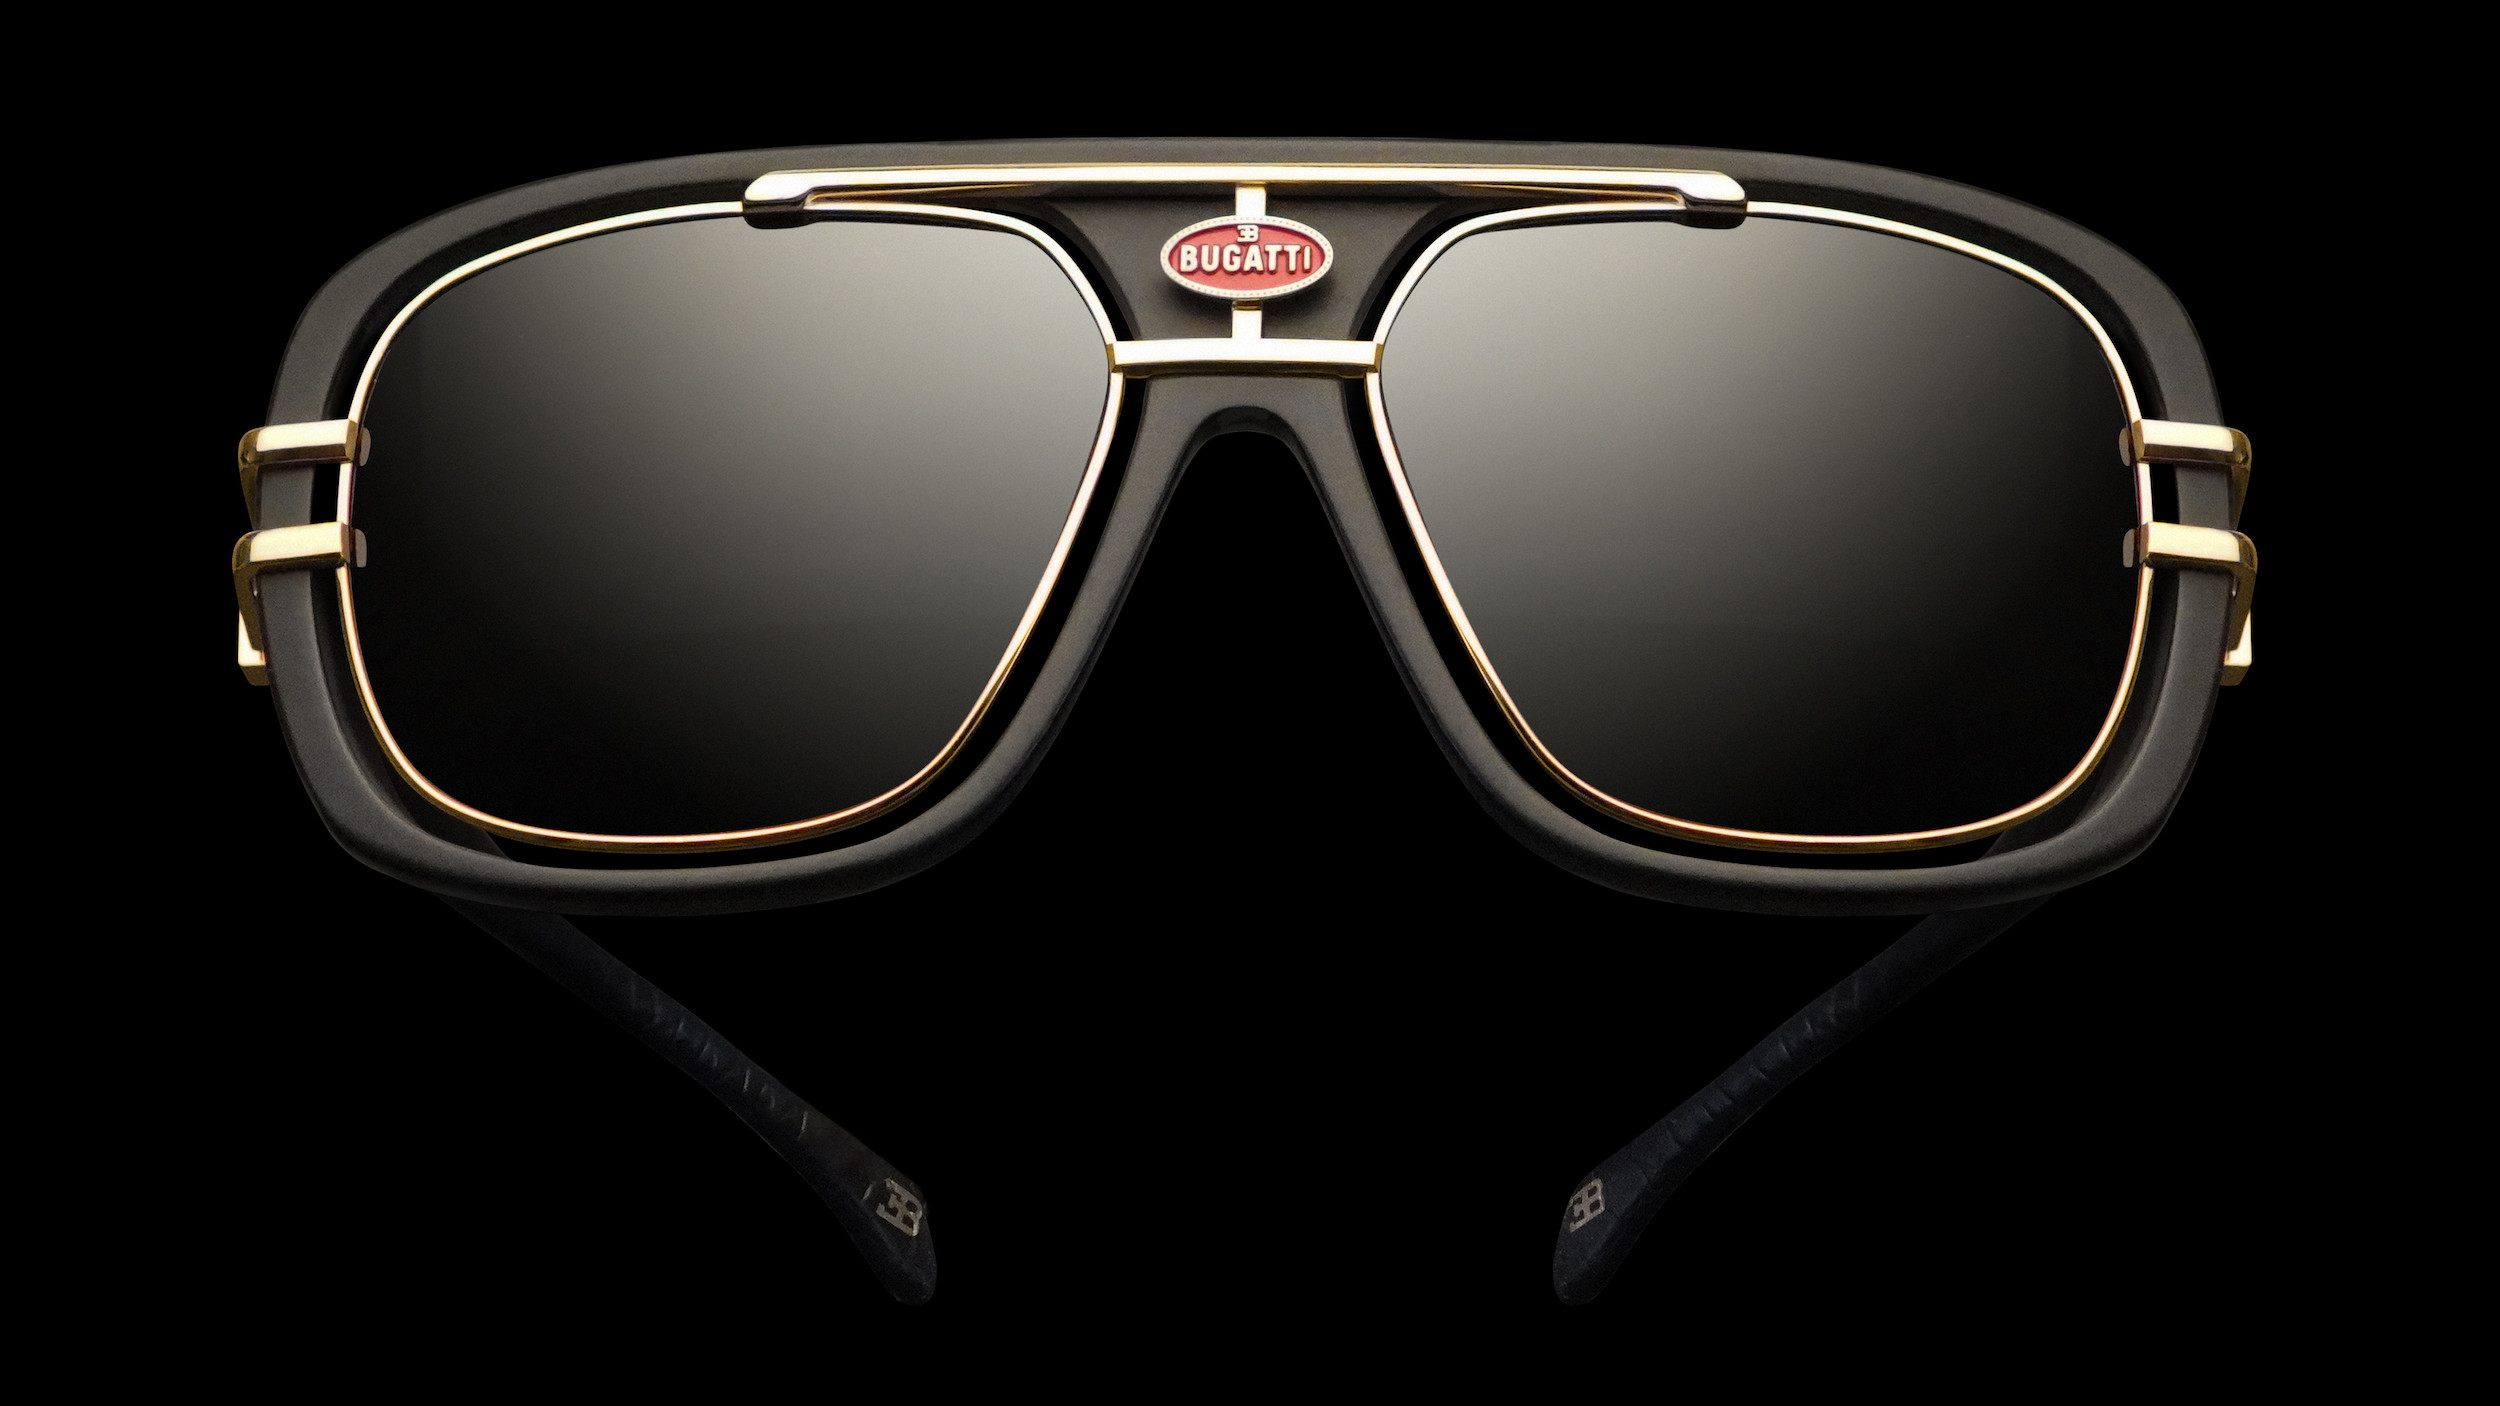 bugatti brille brillen sonnenbrille sonnenbrillen modelle trends mode accessoires larry sands